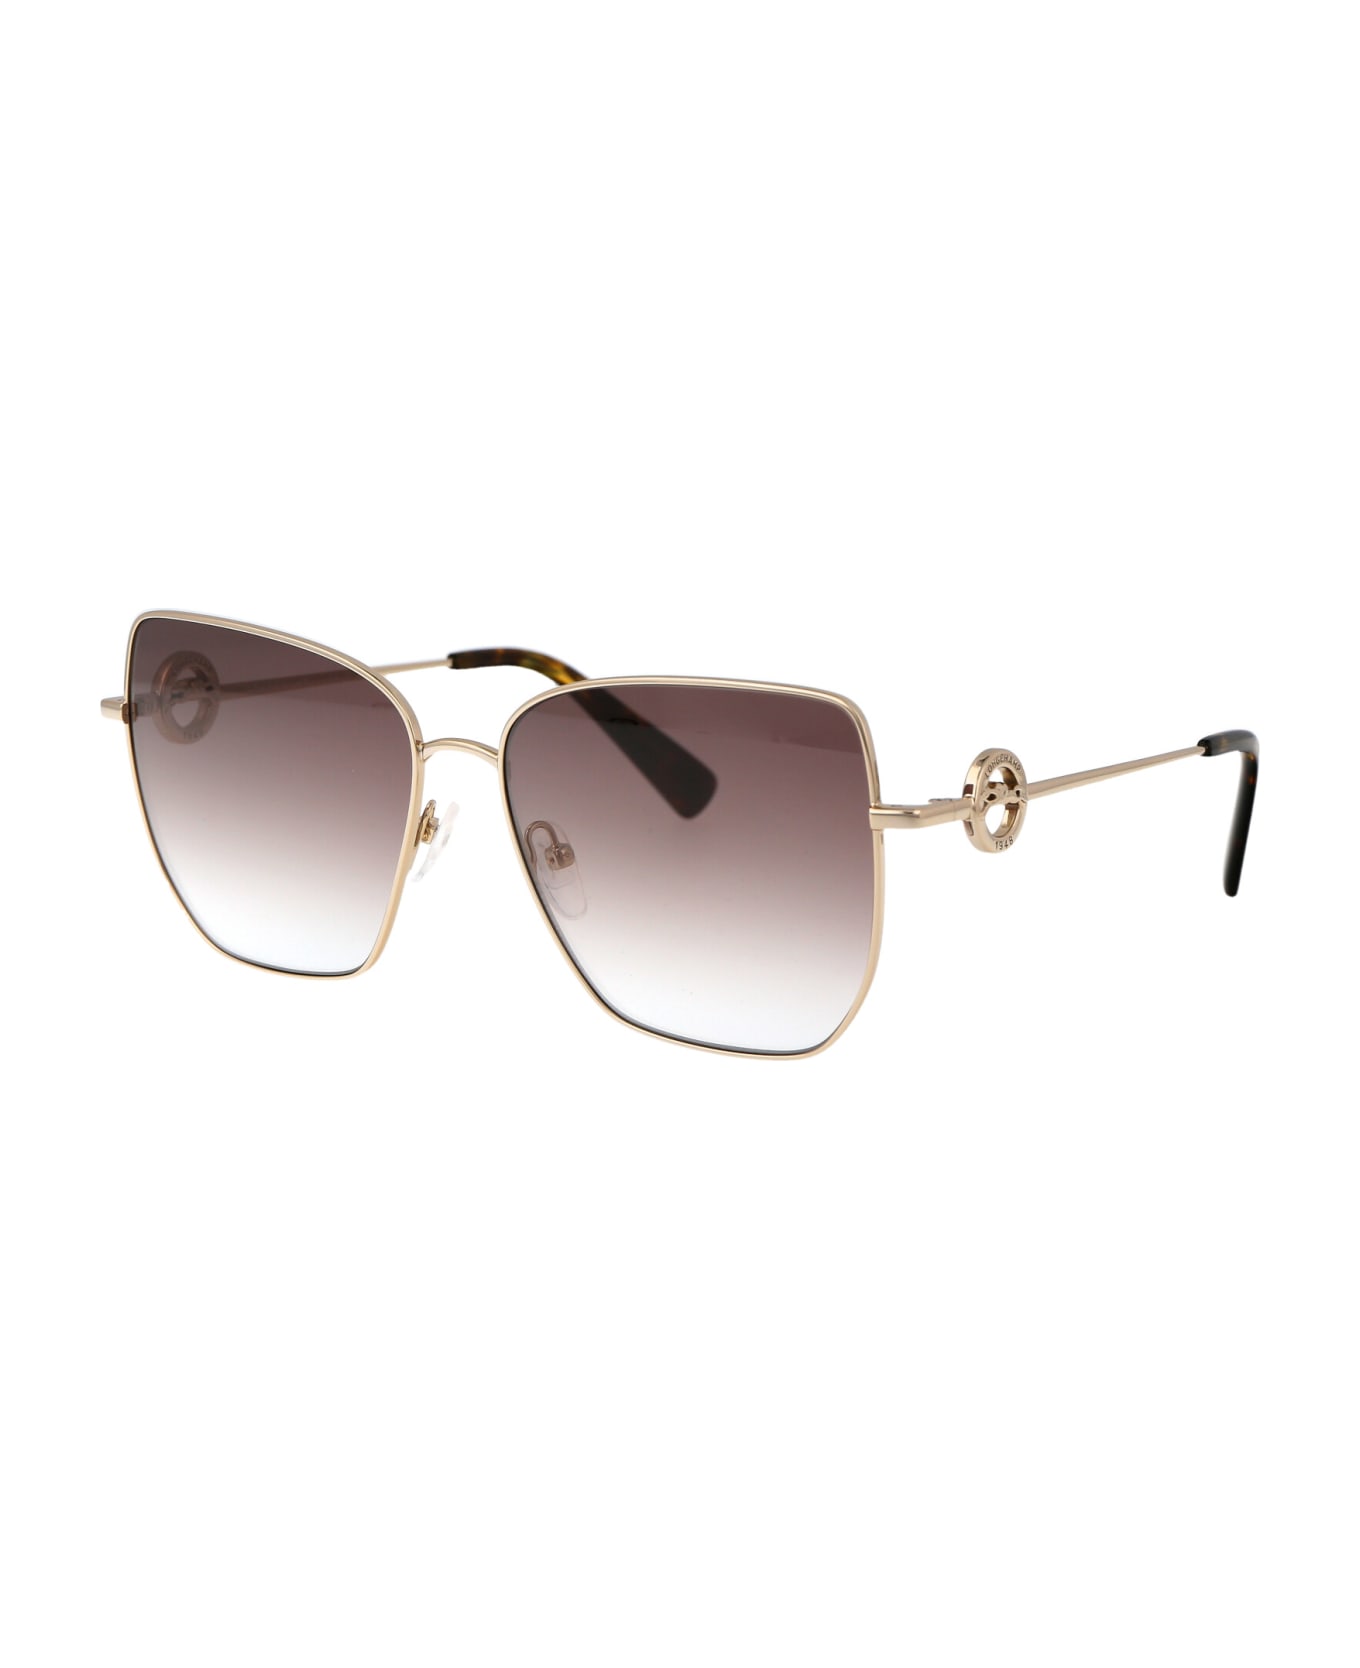 Longchamp Lo169s Sunglasses - 724 GOLD